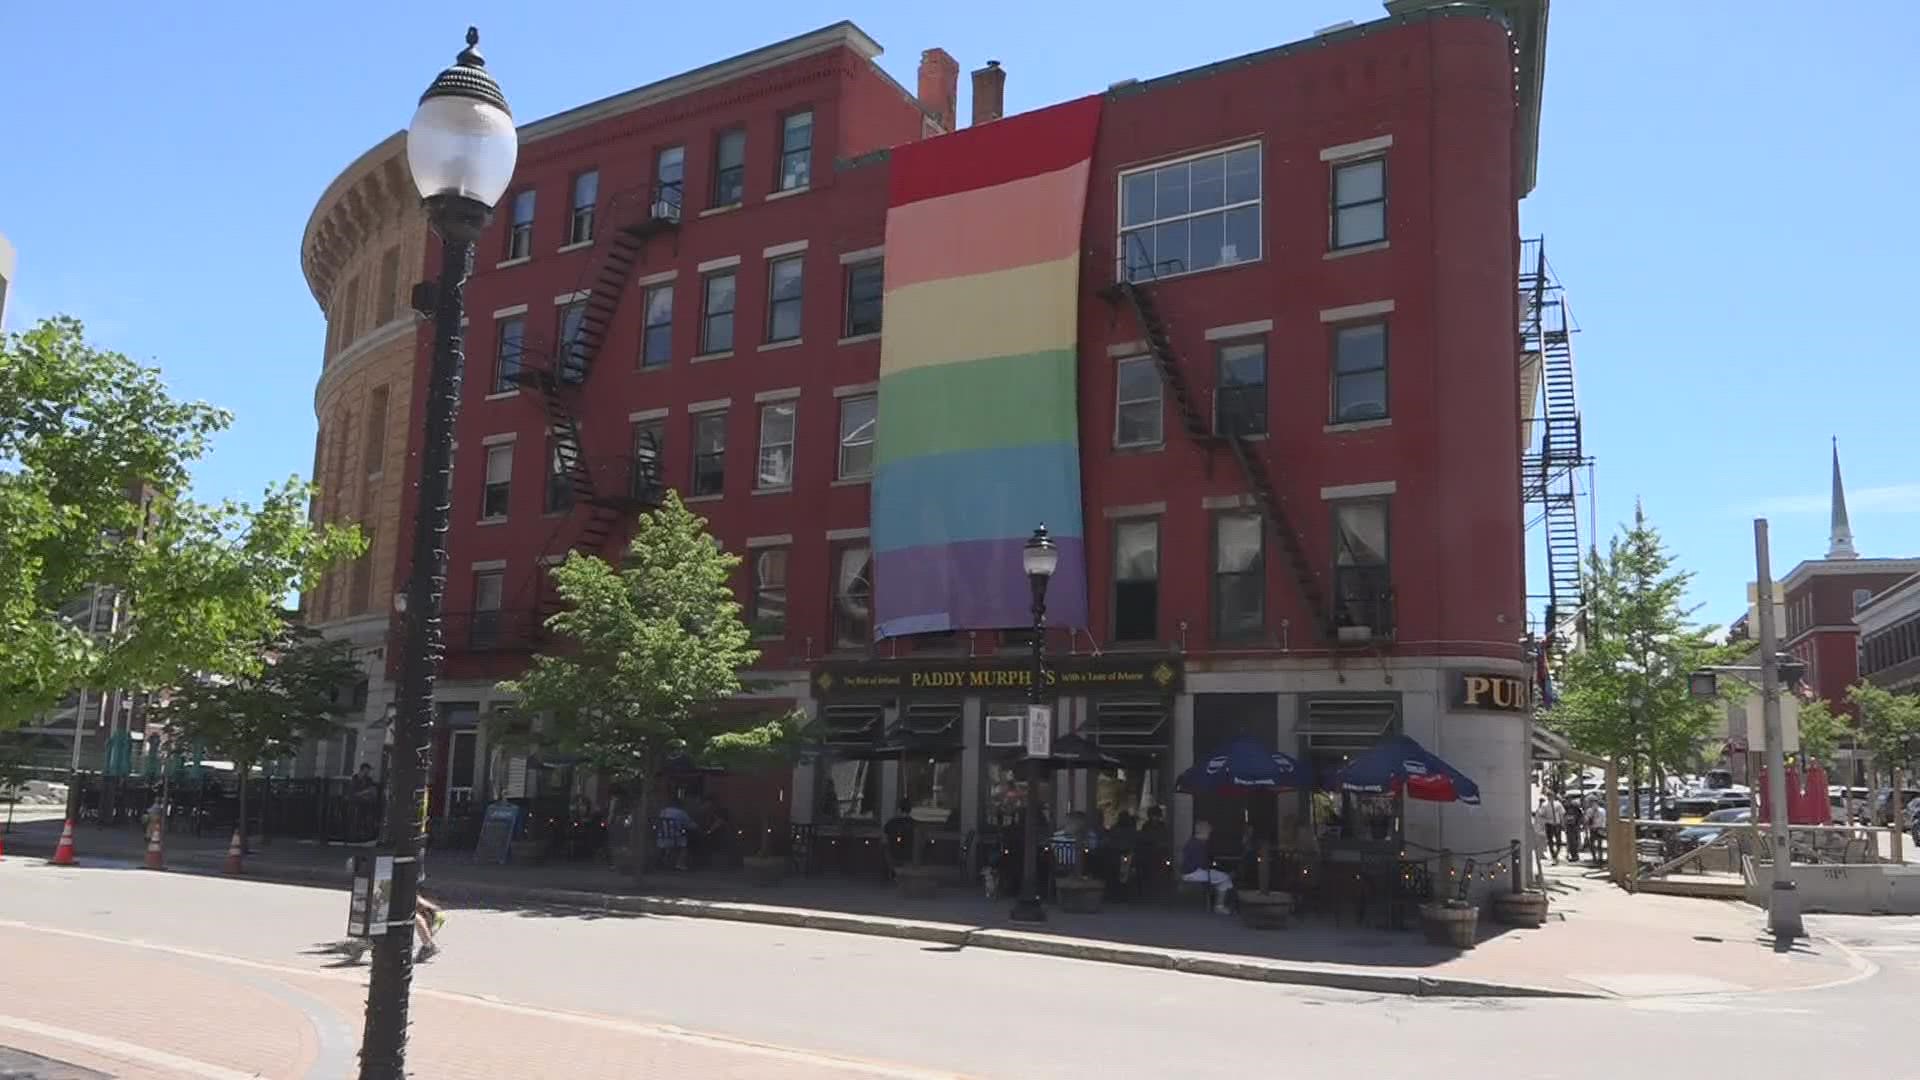 Bangor Pride officially begins June 1